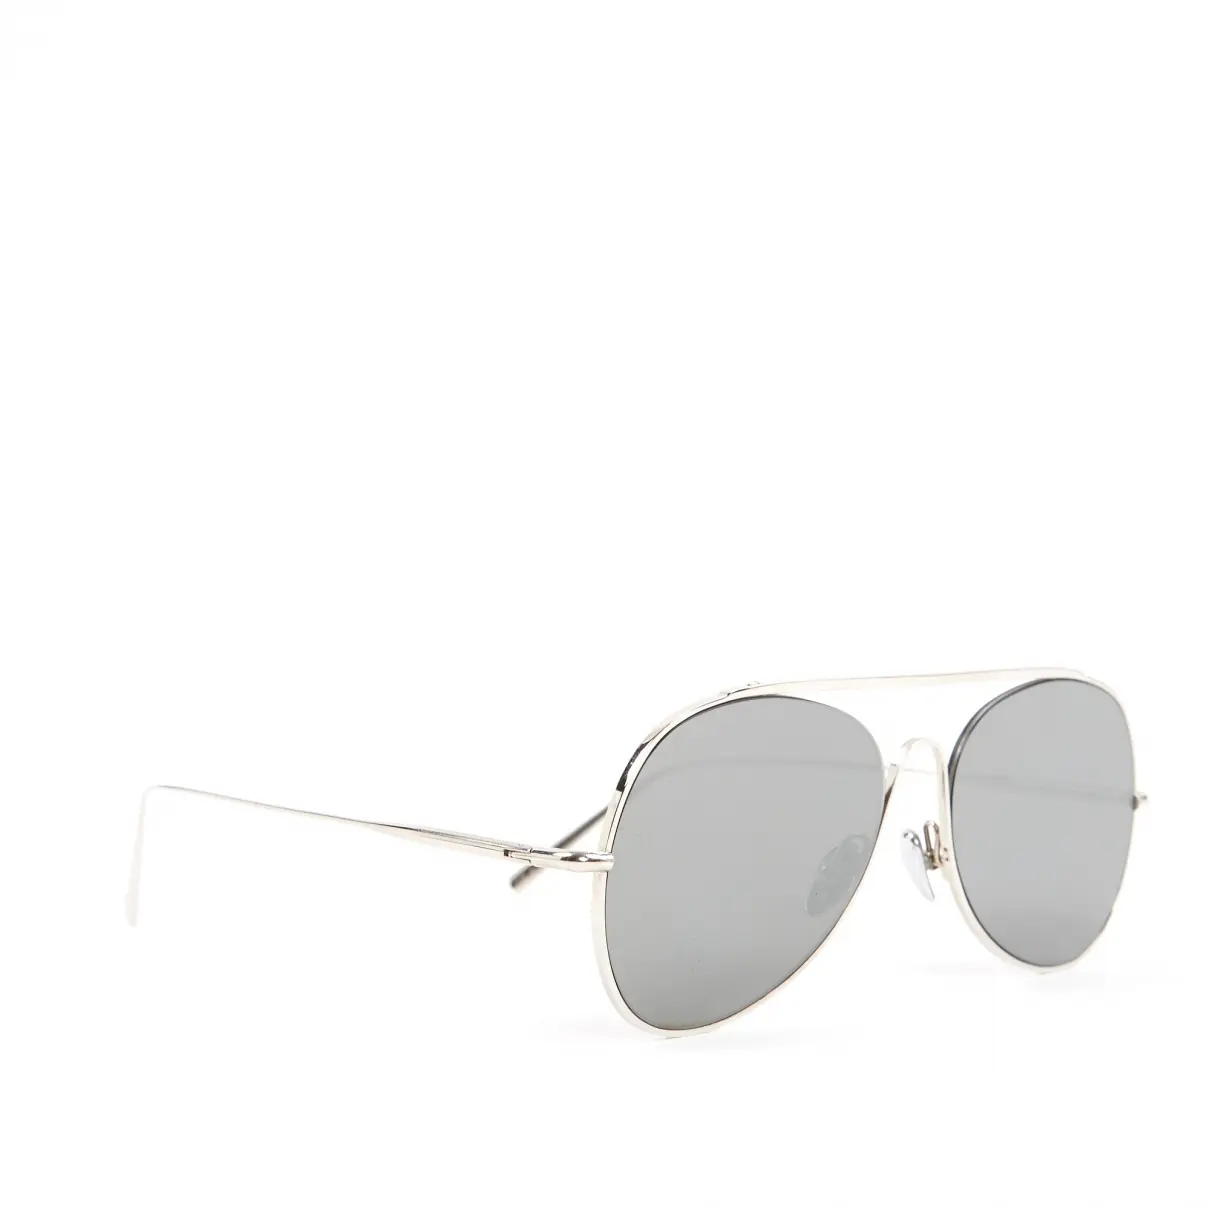 Acne Studios Aviator sunglasses for sale